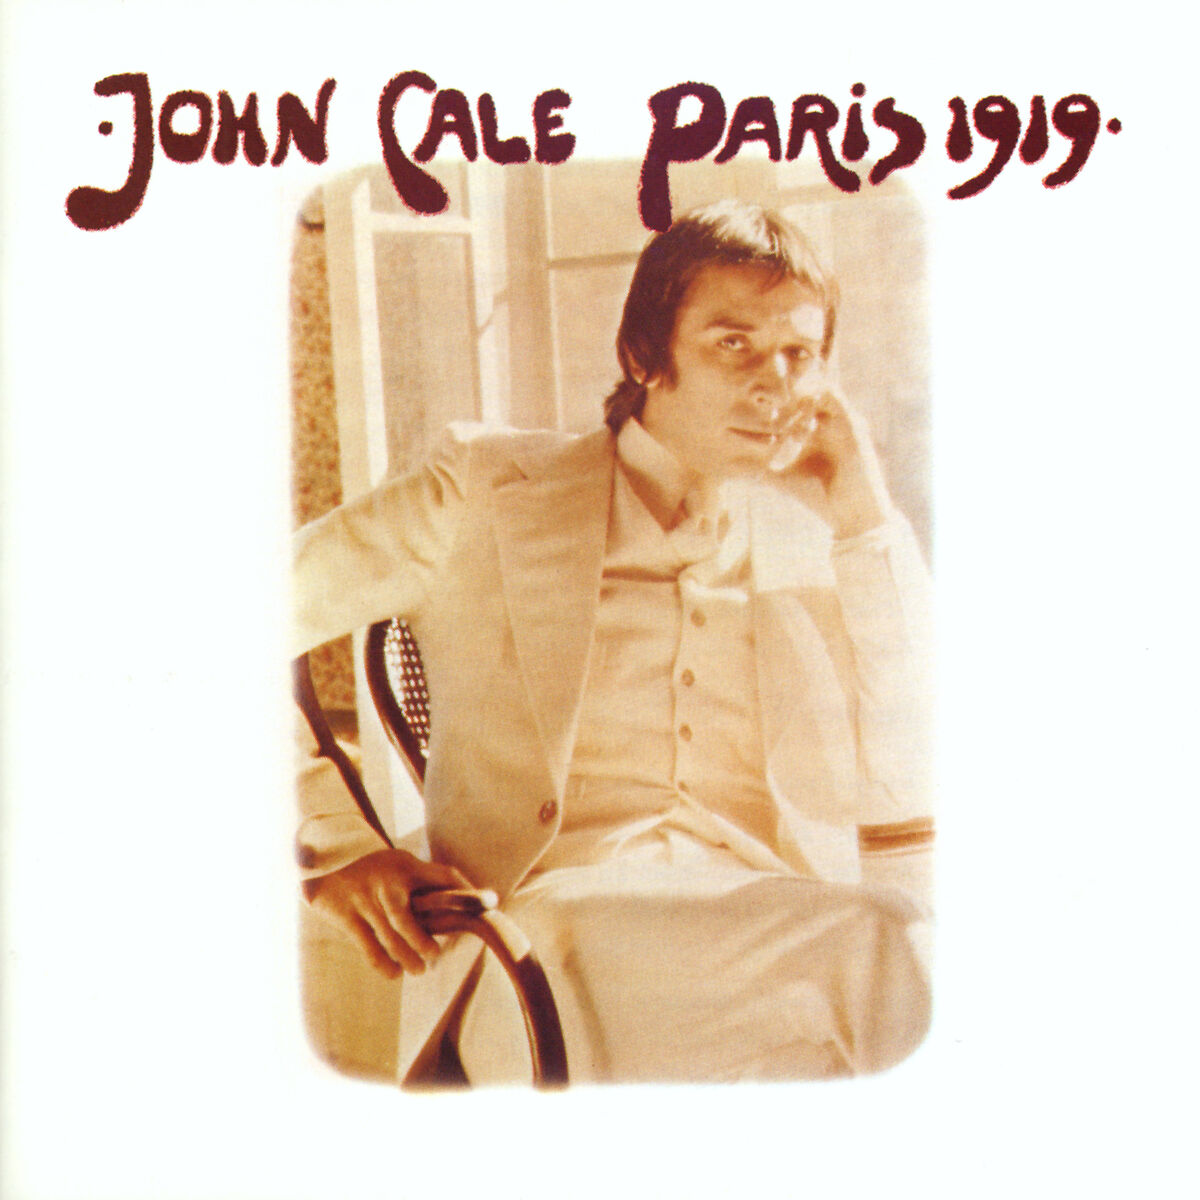 John Cale: albums, songs, playlists | Listen on Deezer